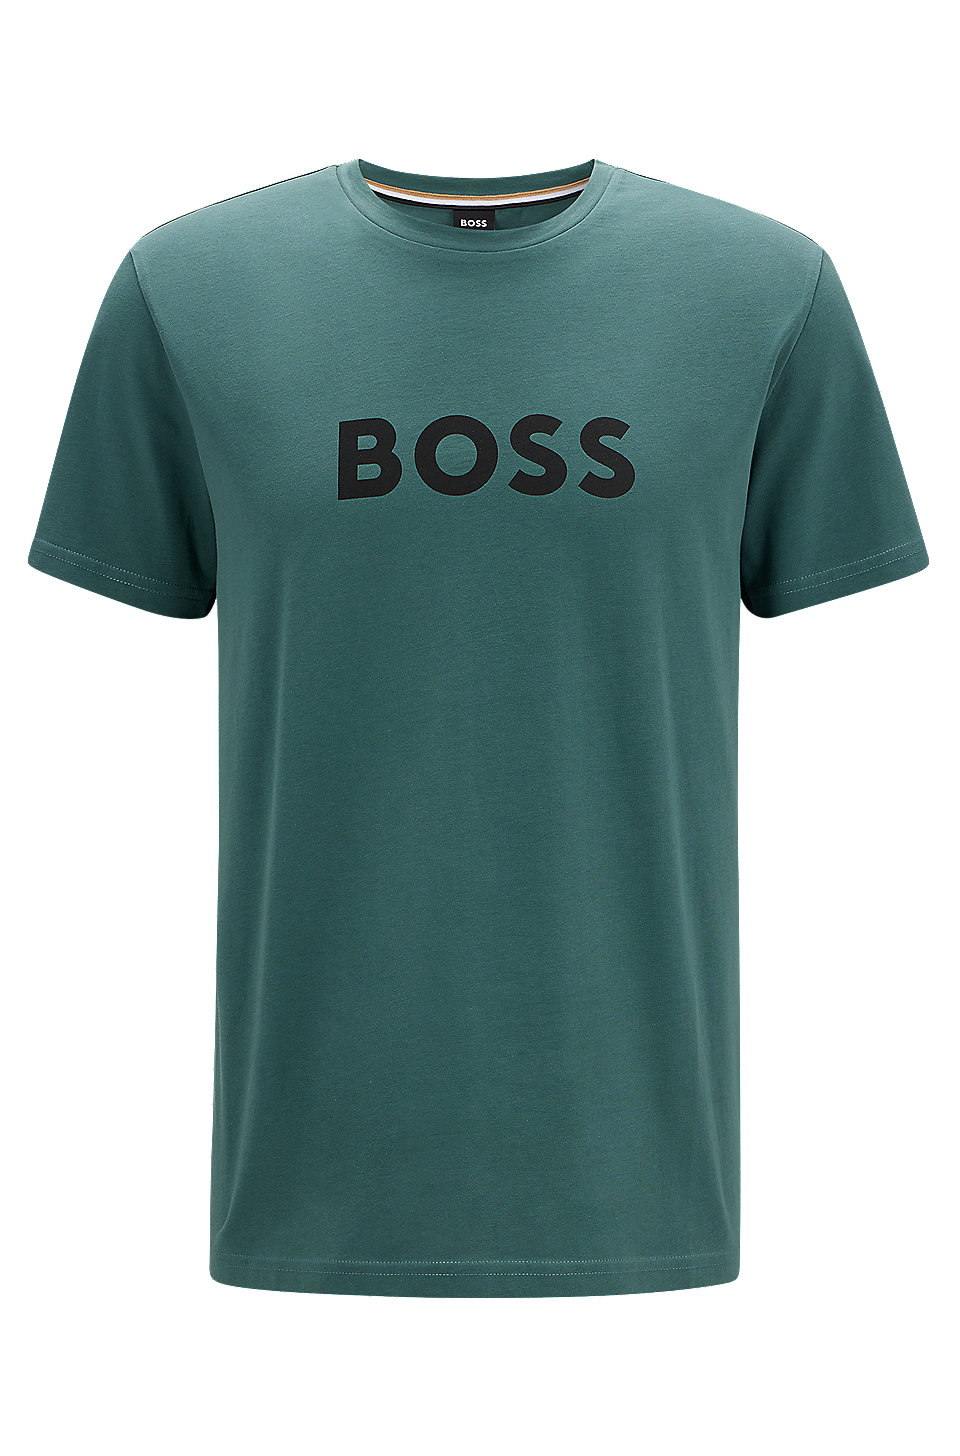 Hugo Boss Shirt Size Chart | ubicaciondepersonas.cdmx.gob.mx